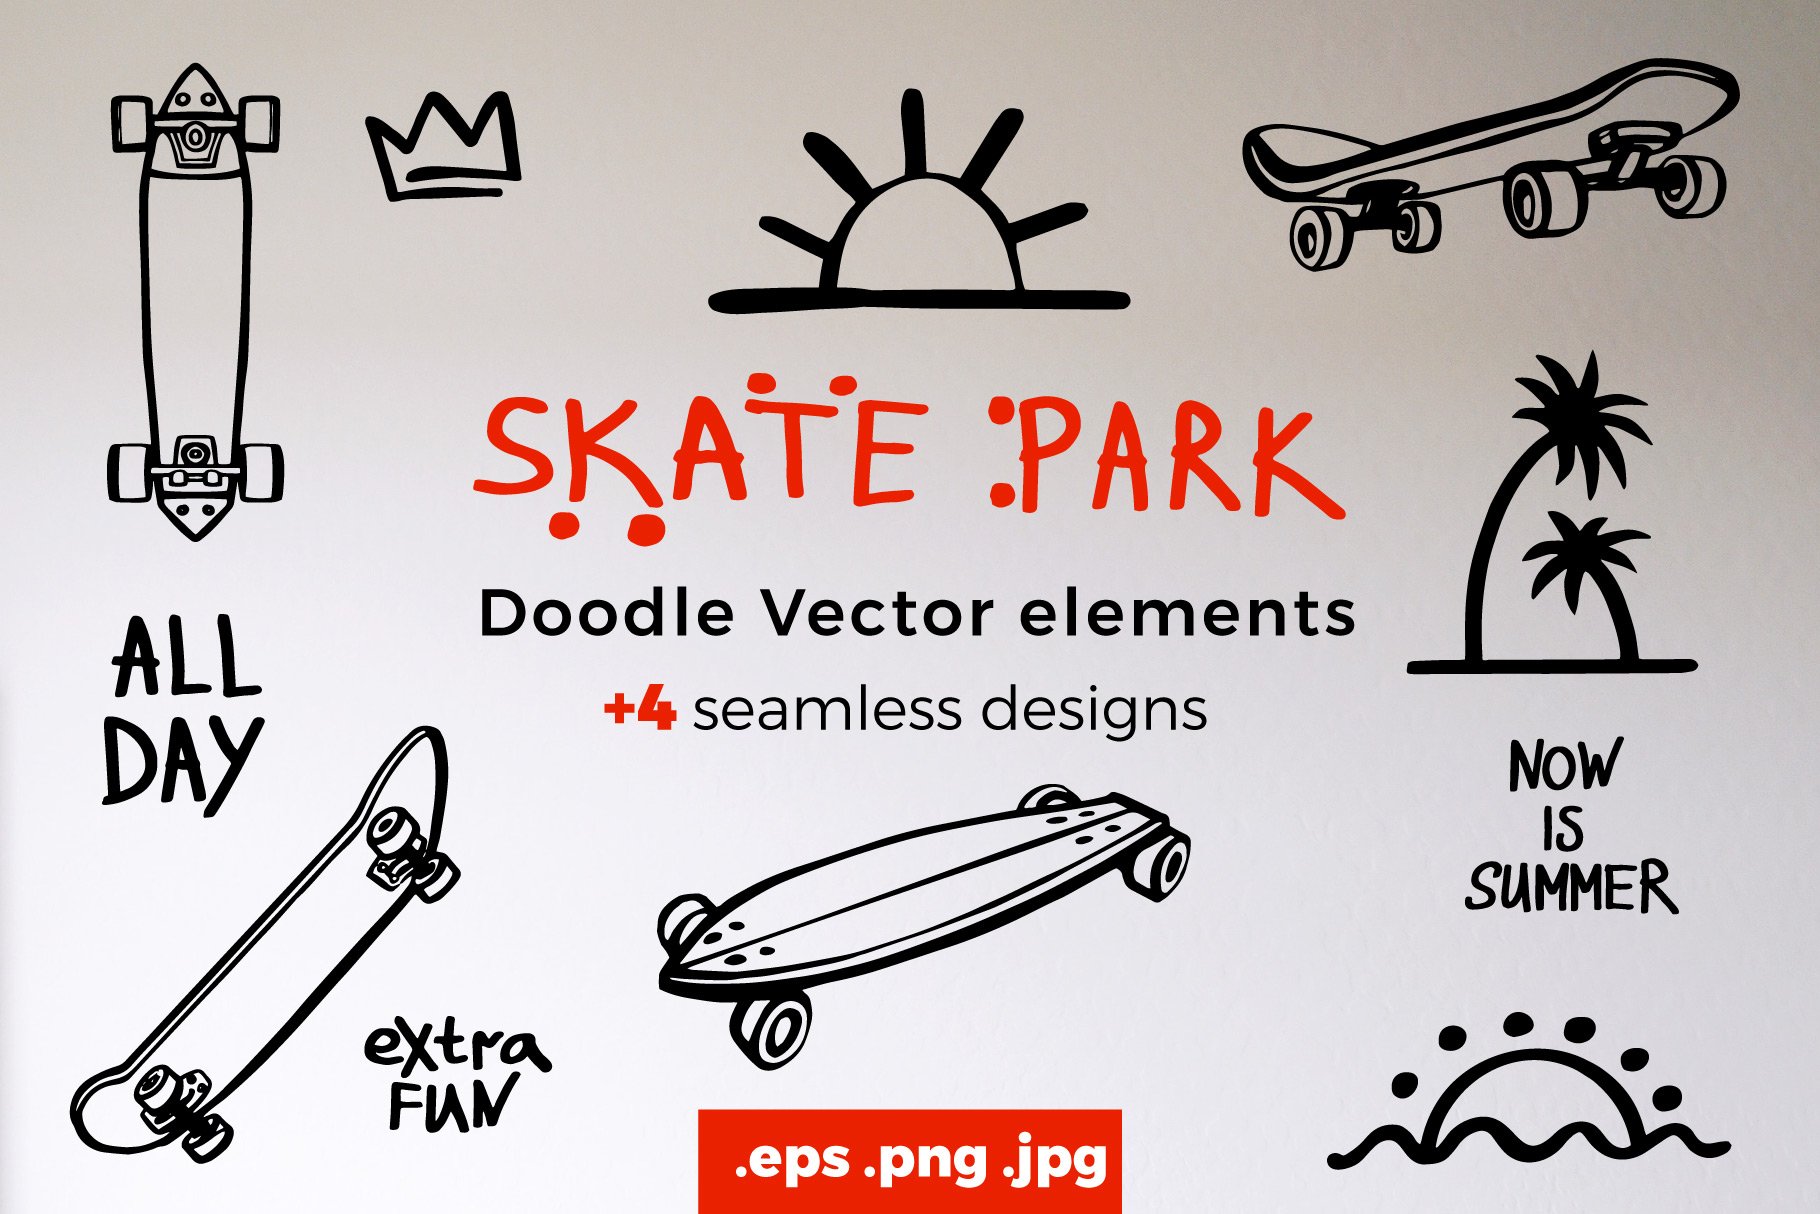 Skateboard Park Sticker & Patterns cover image.